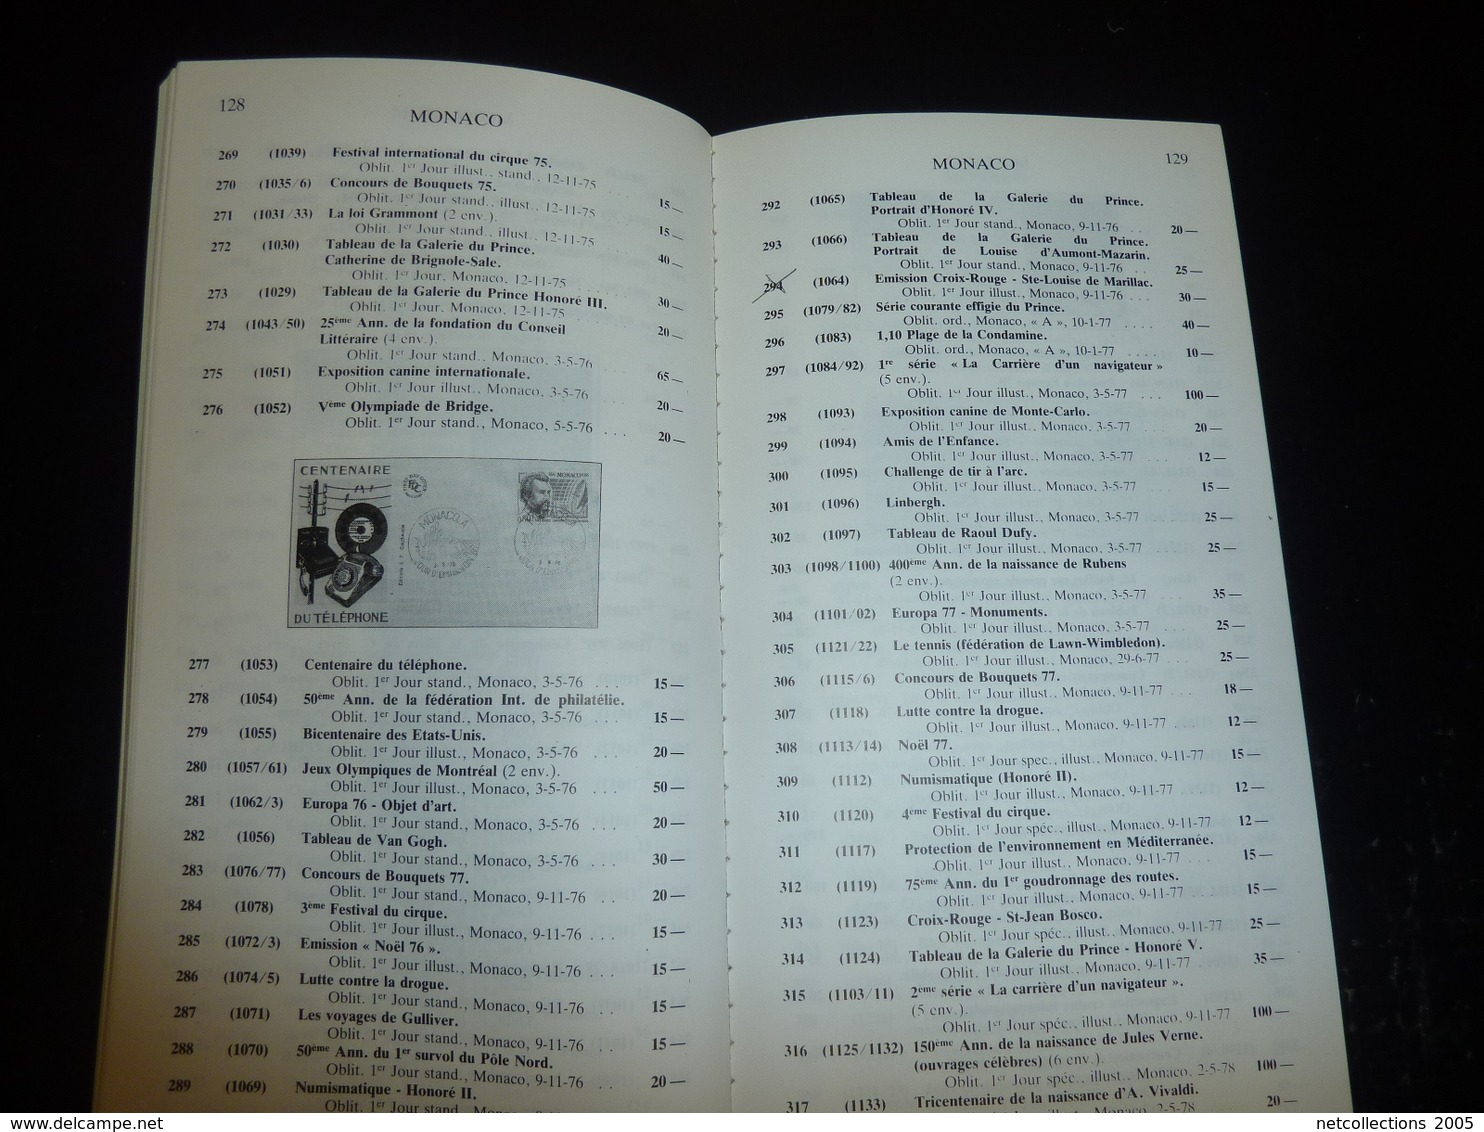 CATALOGUE DES ENVELOPPES ET CARTES PREMIER JOUR 1986-1987 FIRST DAY COVER EDITIONS JEAN FARCIGNY